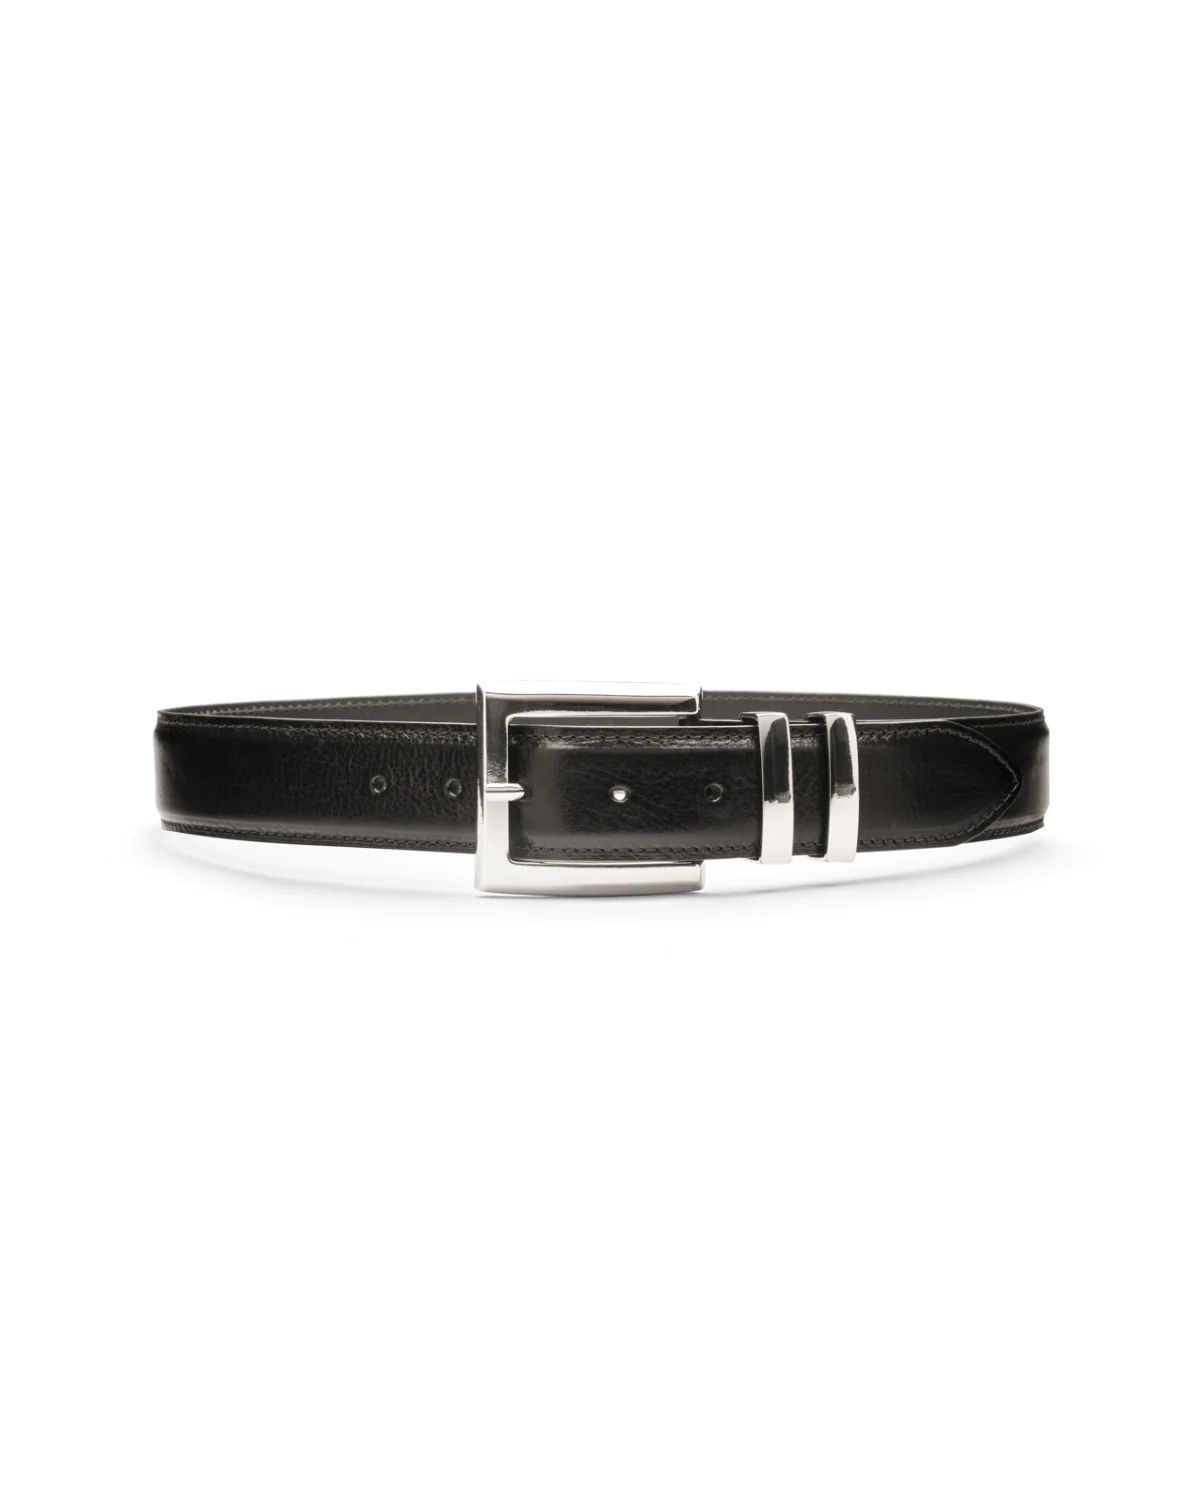 Naomi silver buckle leather waist belt | Black & Brown London